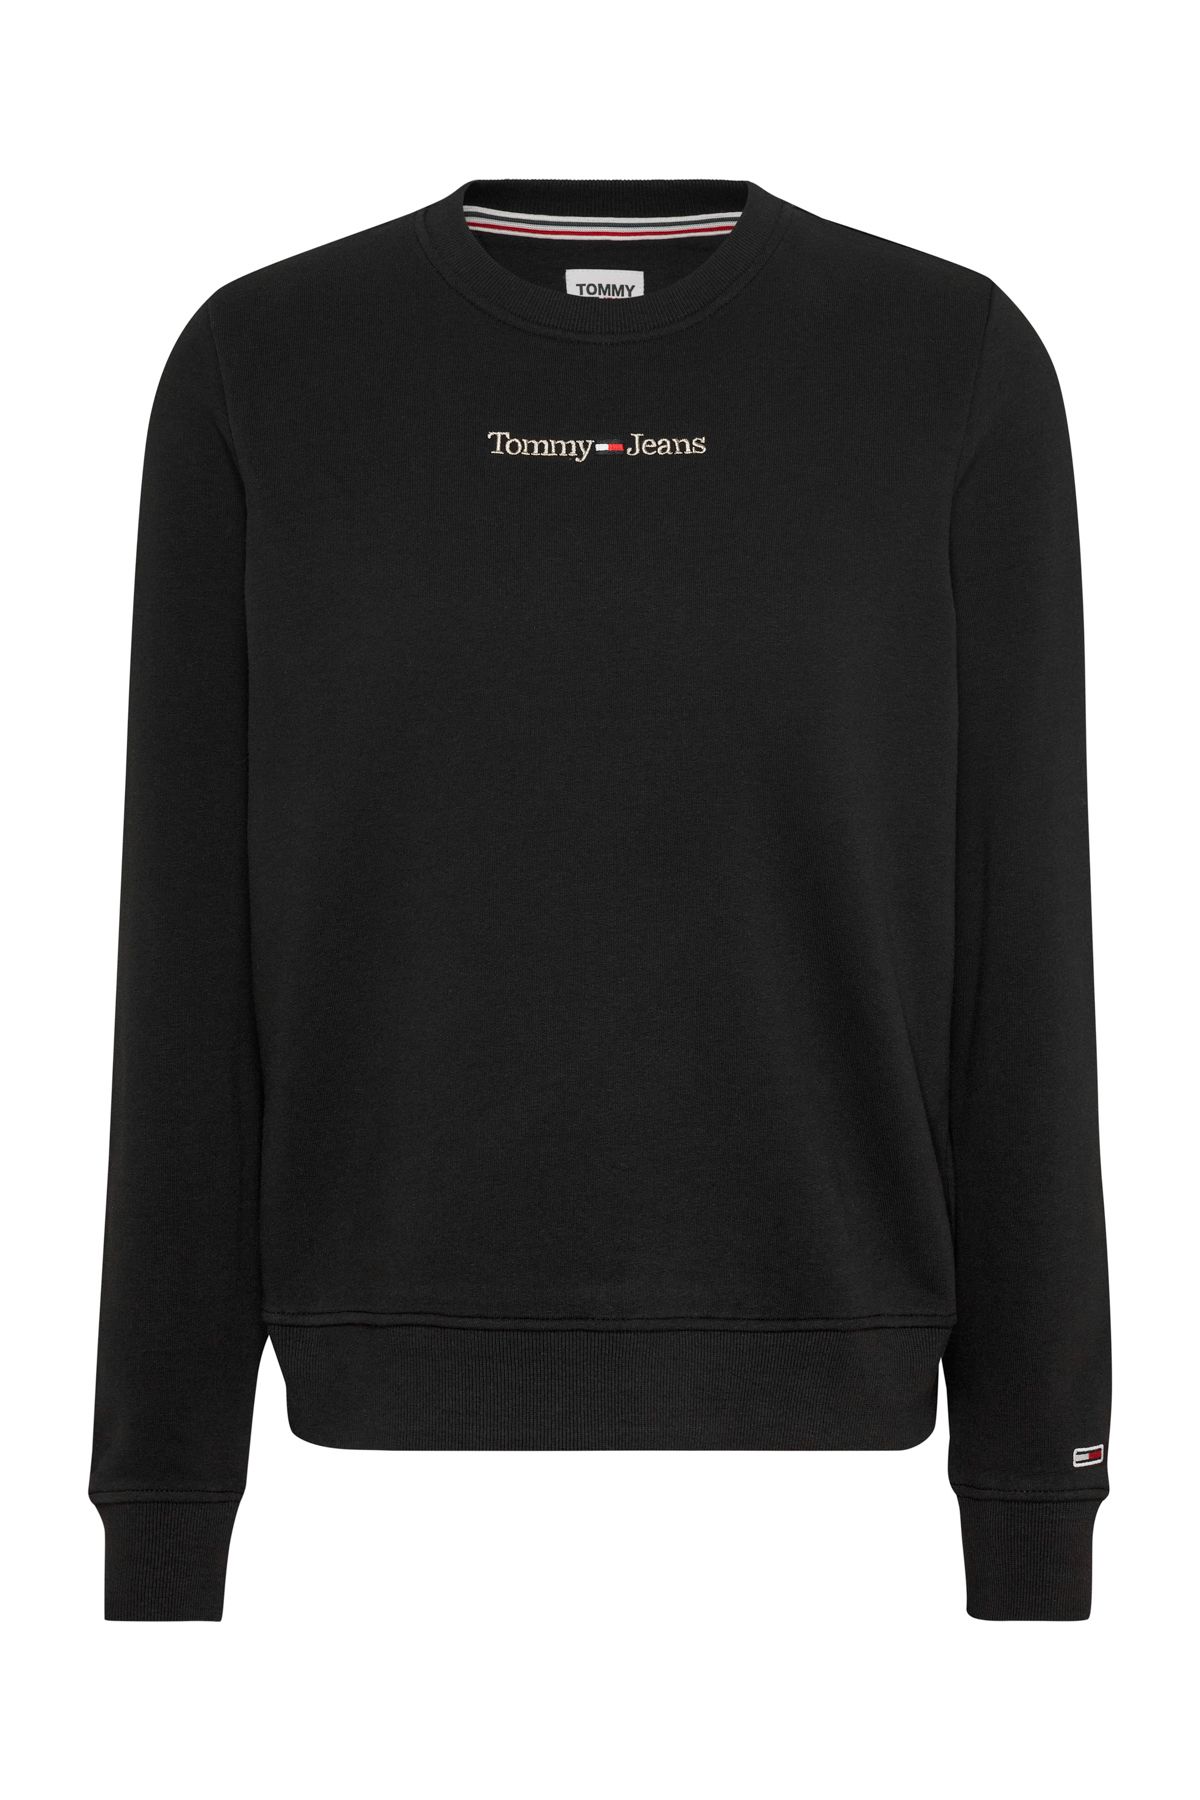 Tommy Hilfiger Sweatshirt - Black - Regular fit - Trendyol